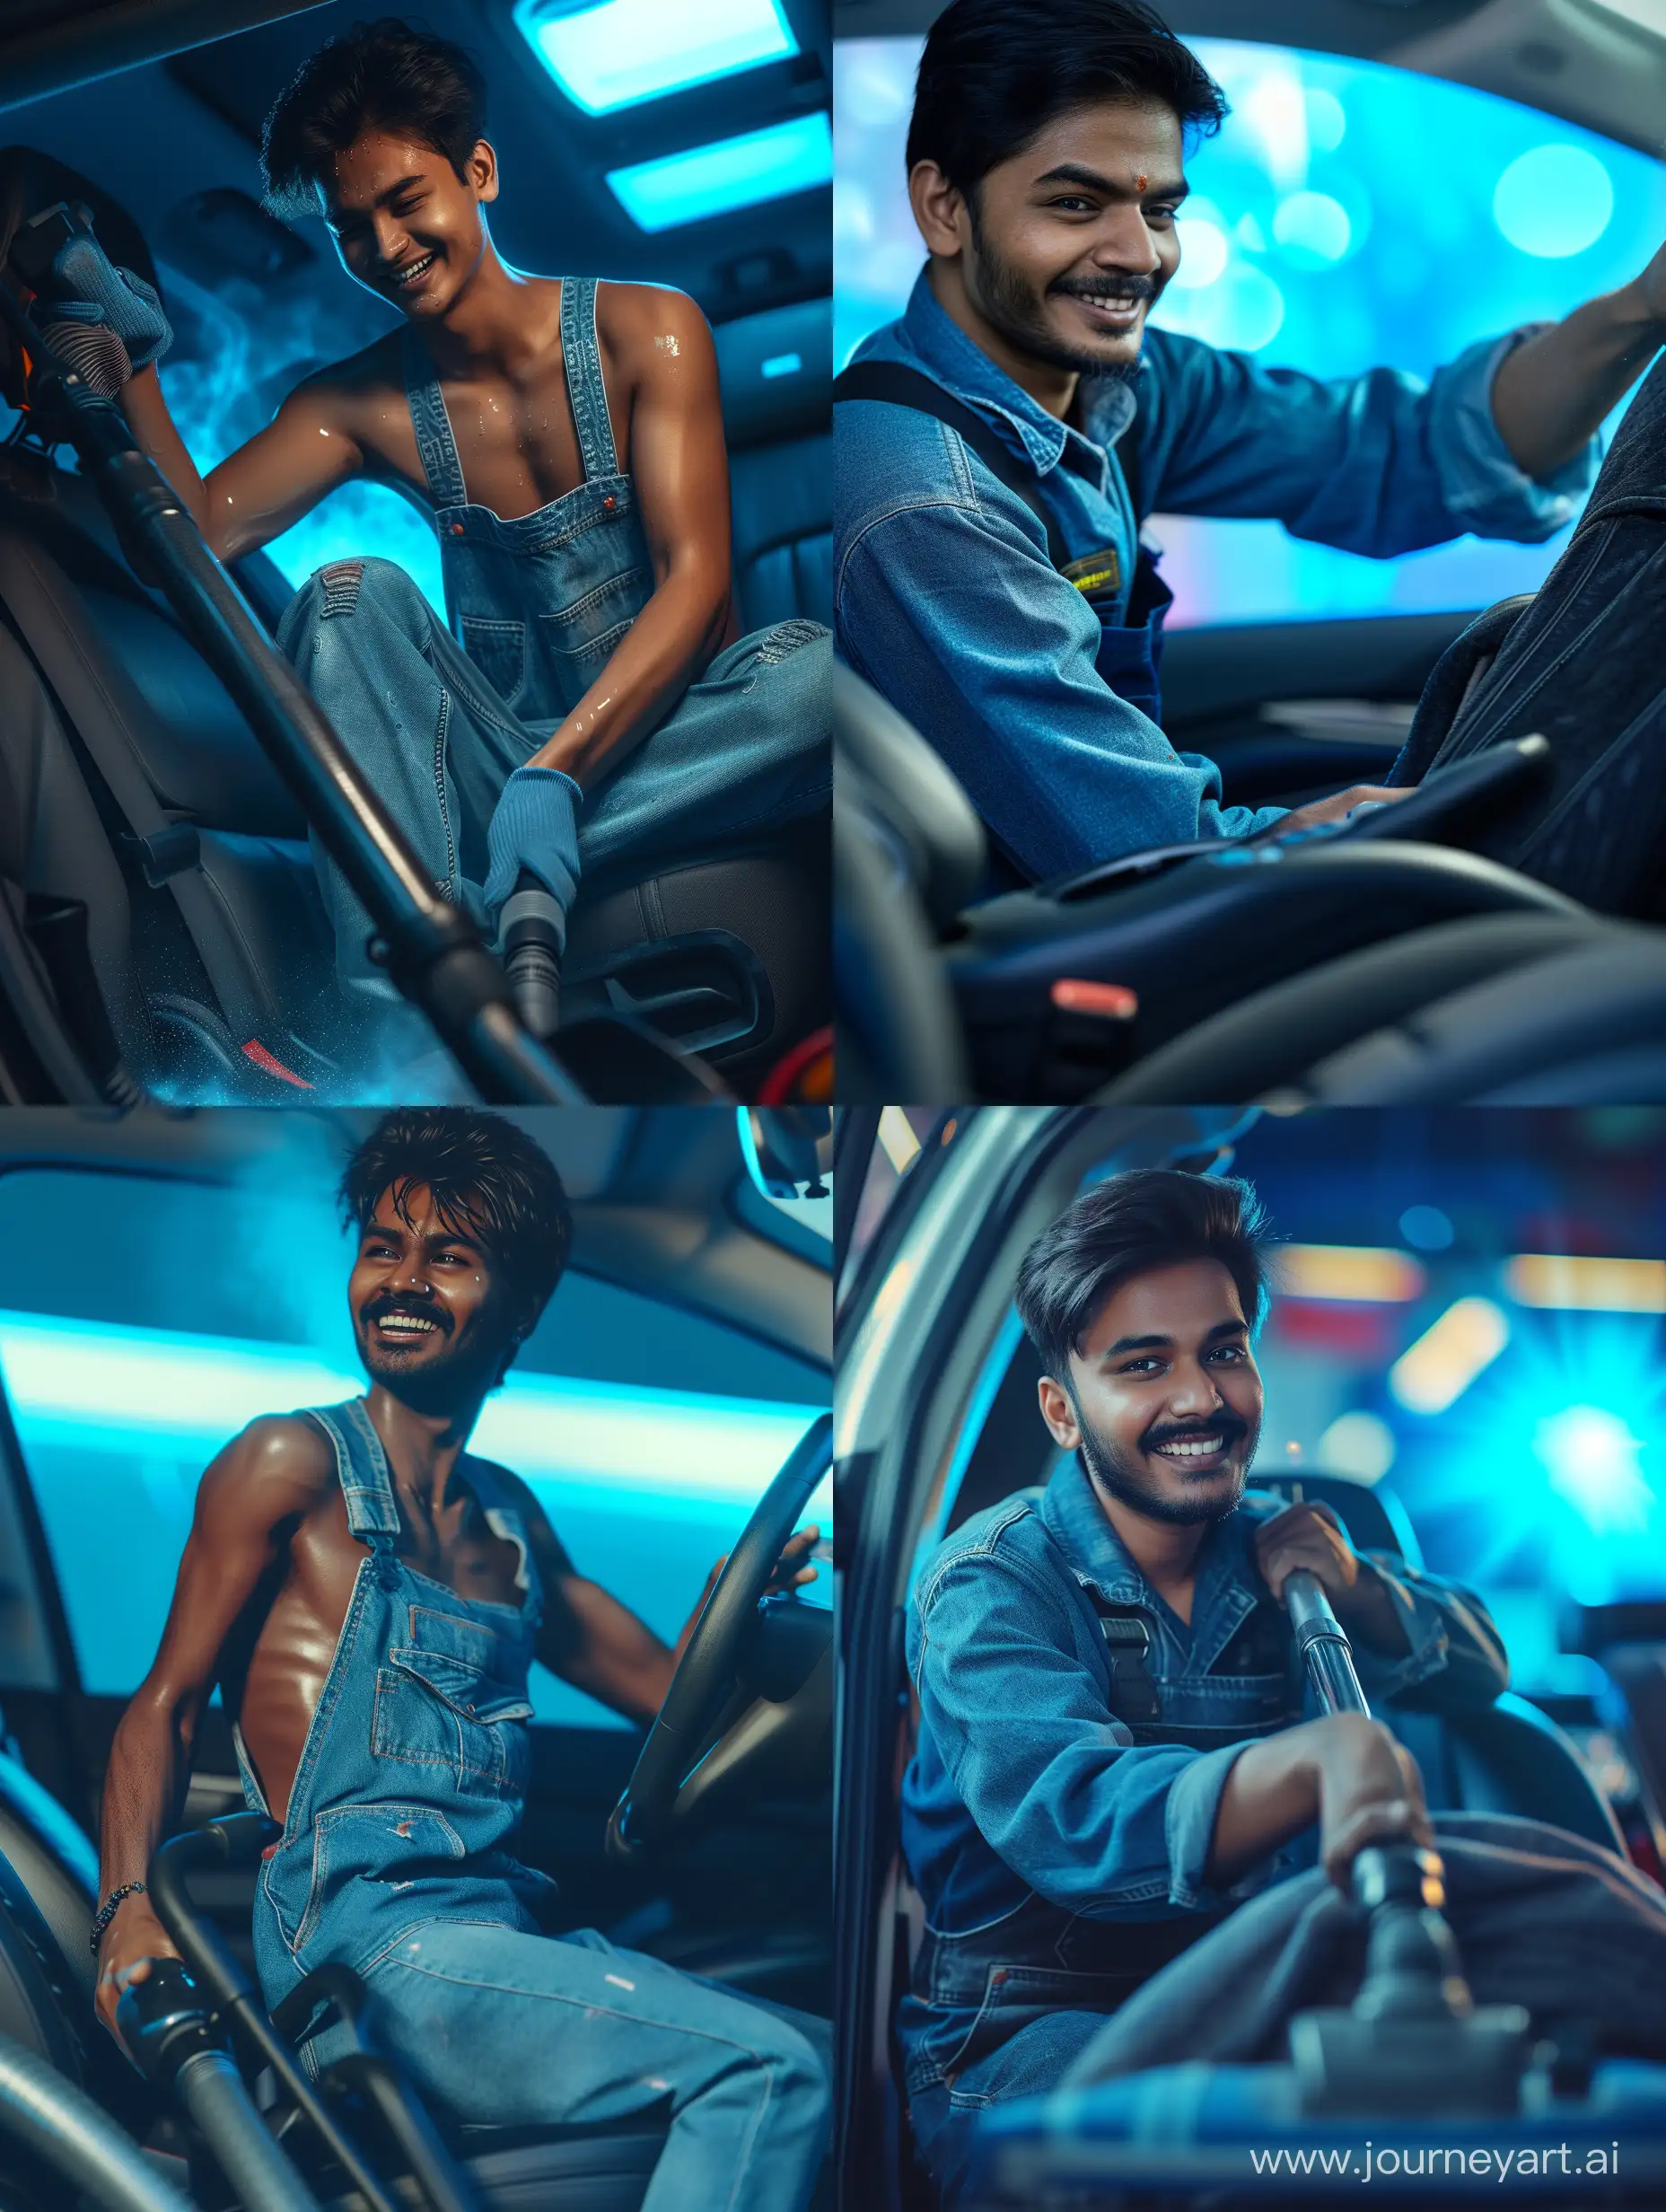 Smiling-Bangladeshi-Worker-Vacuuming-Car-Seat-in-BlueLit-Atmosphere